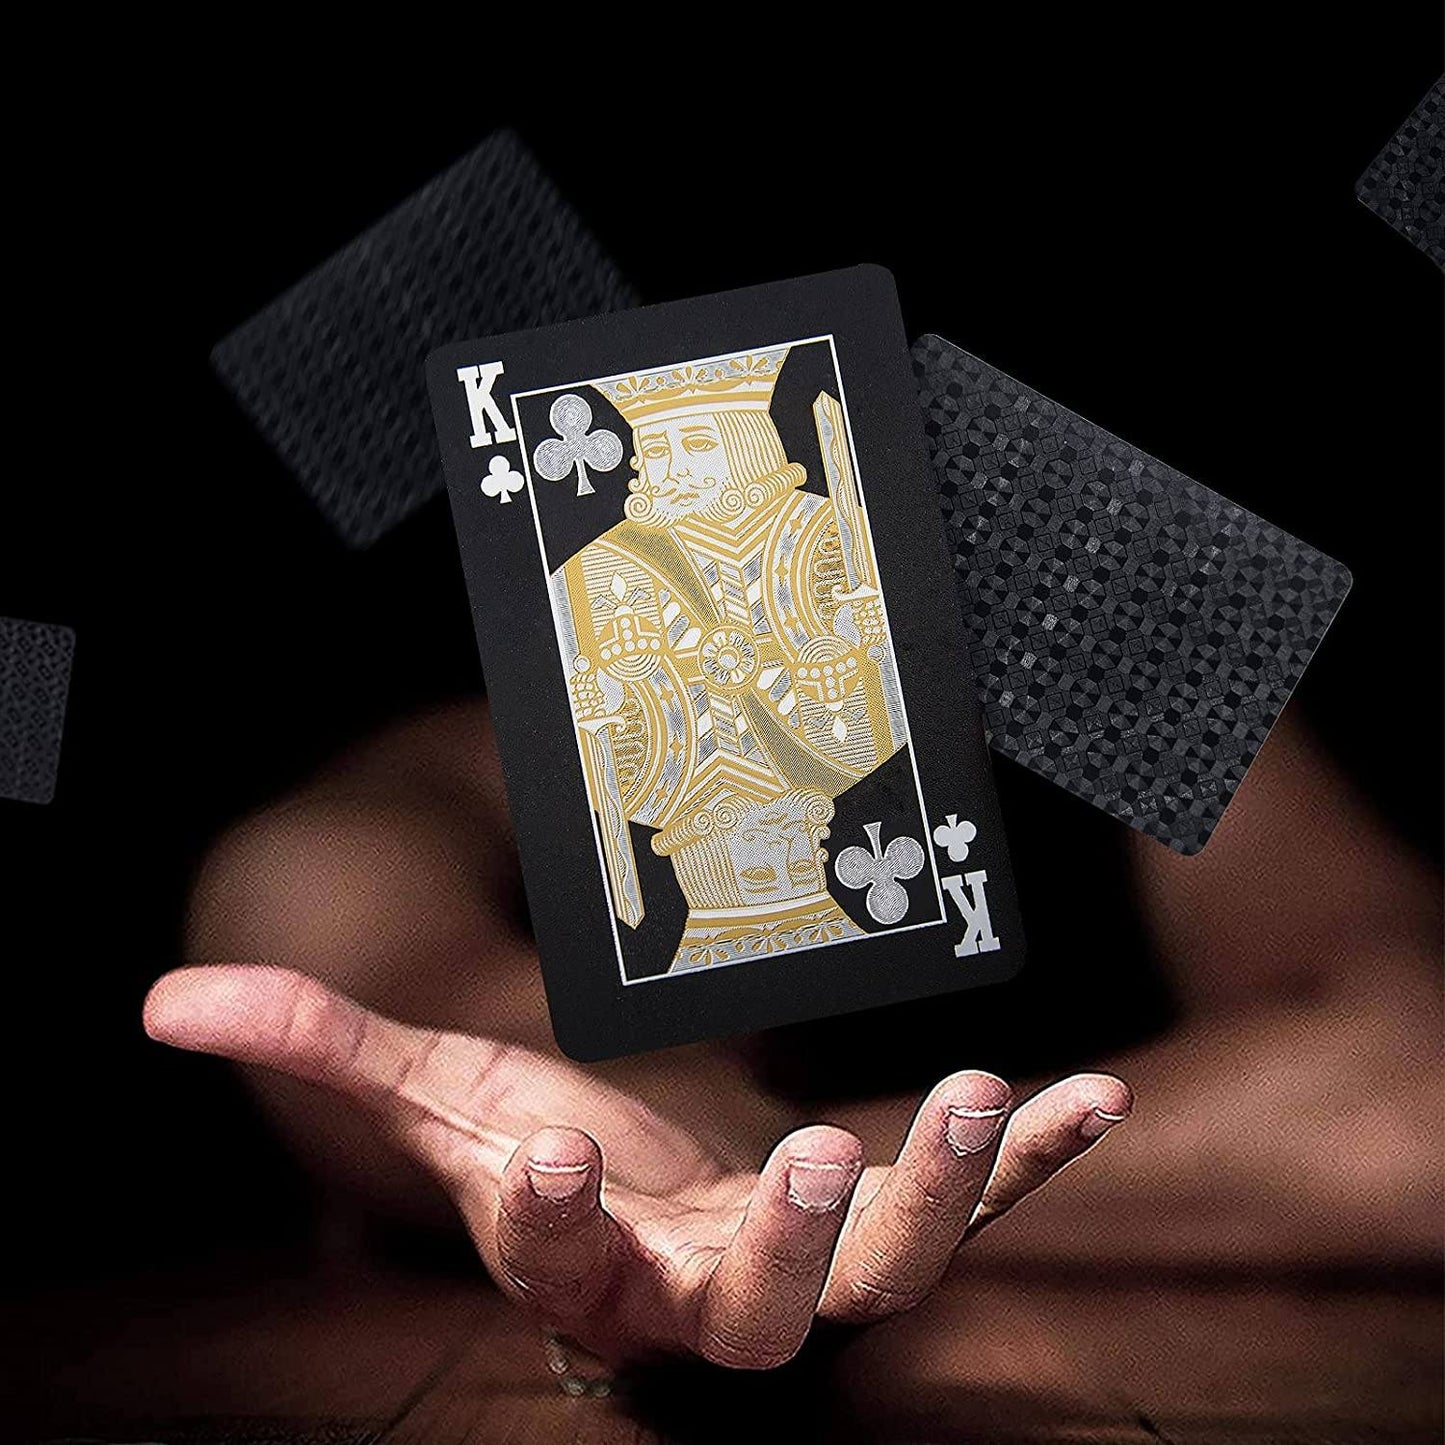 Diamond Foil Playing Card Manacove 